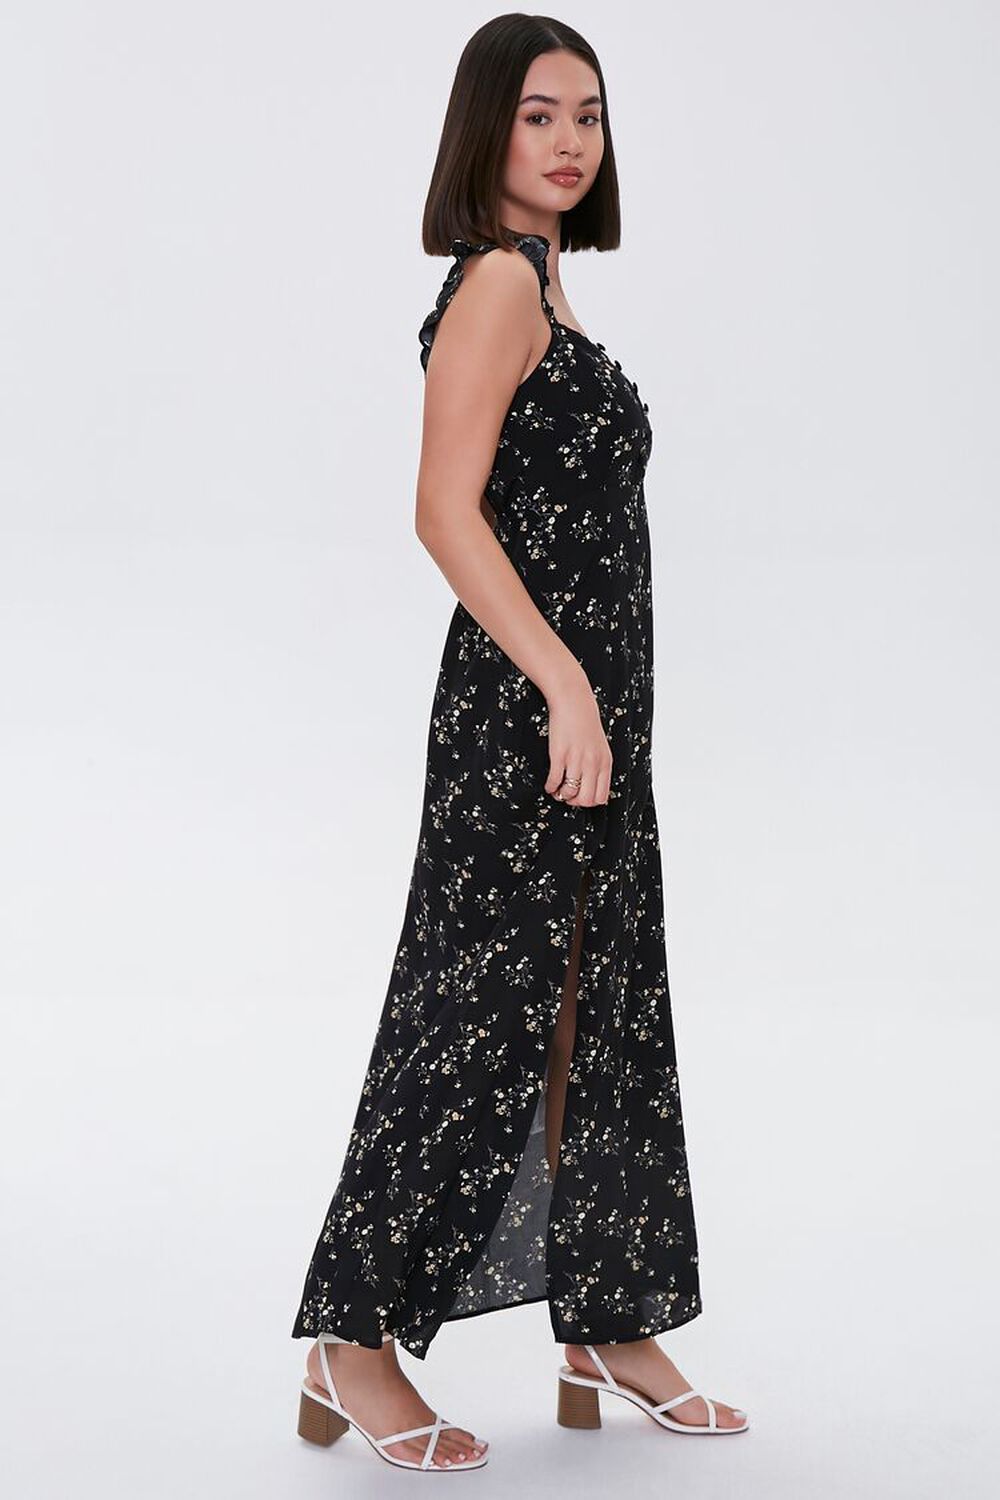 BLACK/MULTI Floral Maxi Dress, image 2